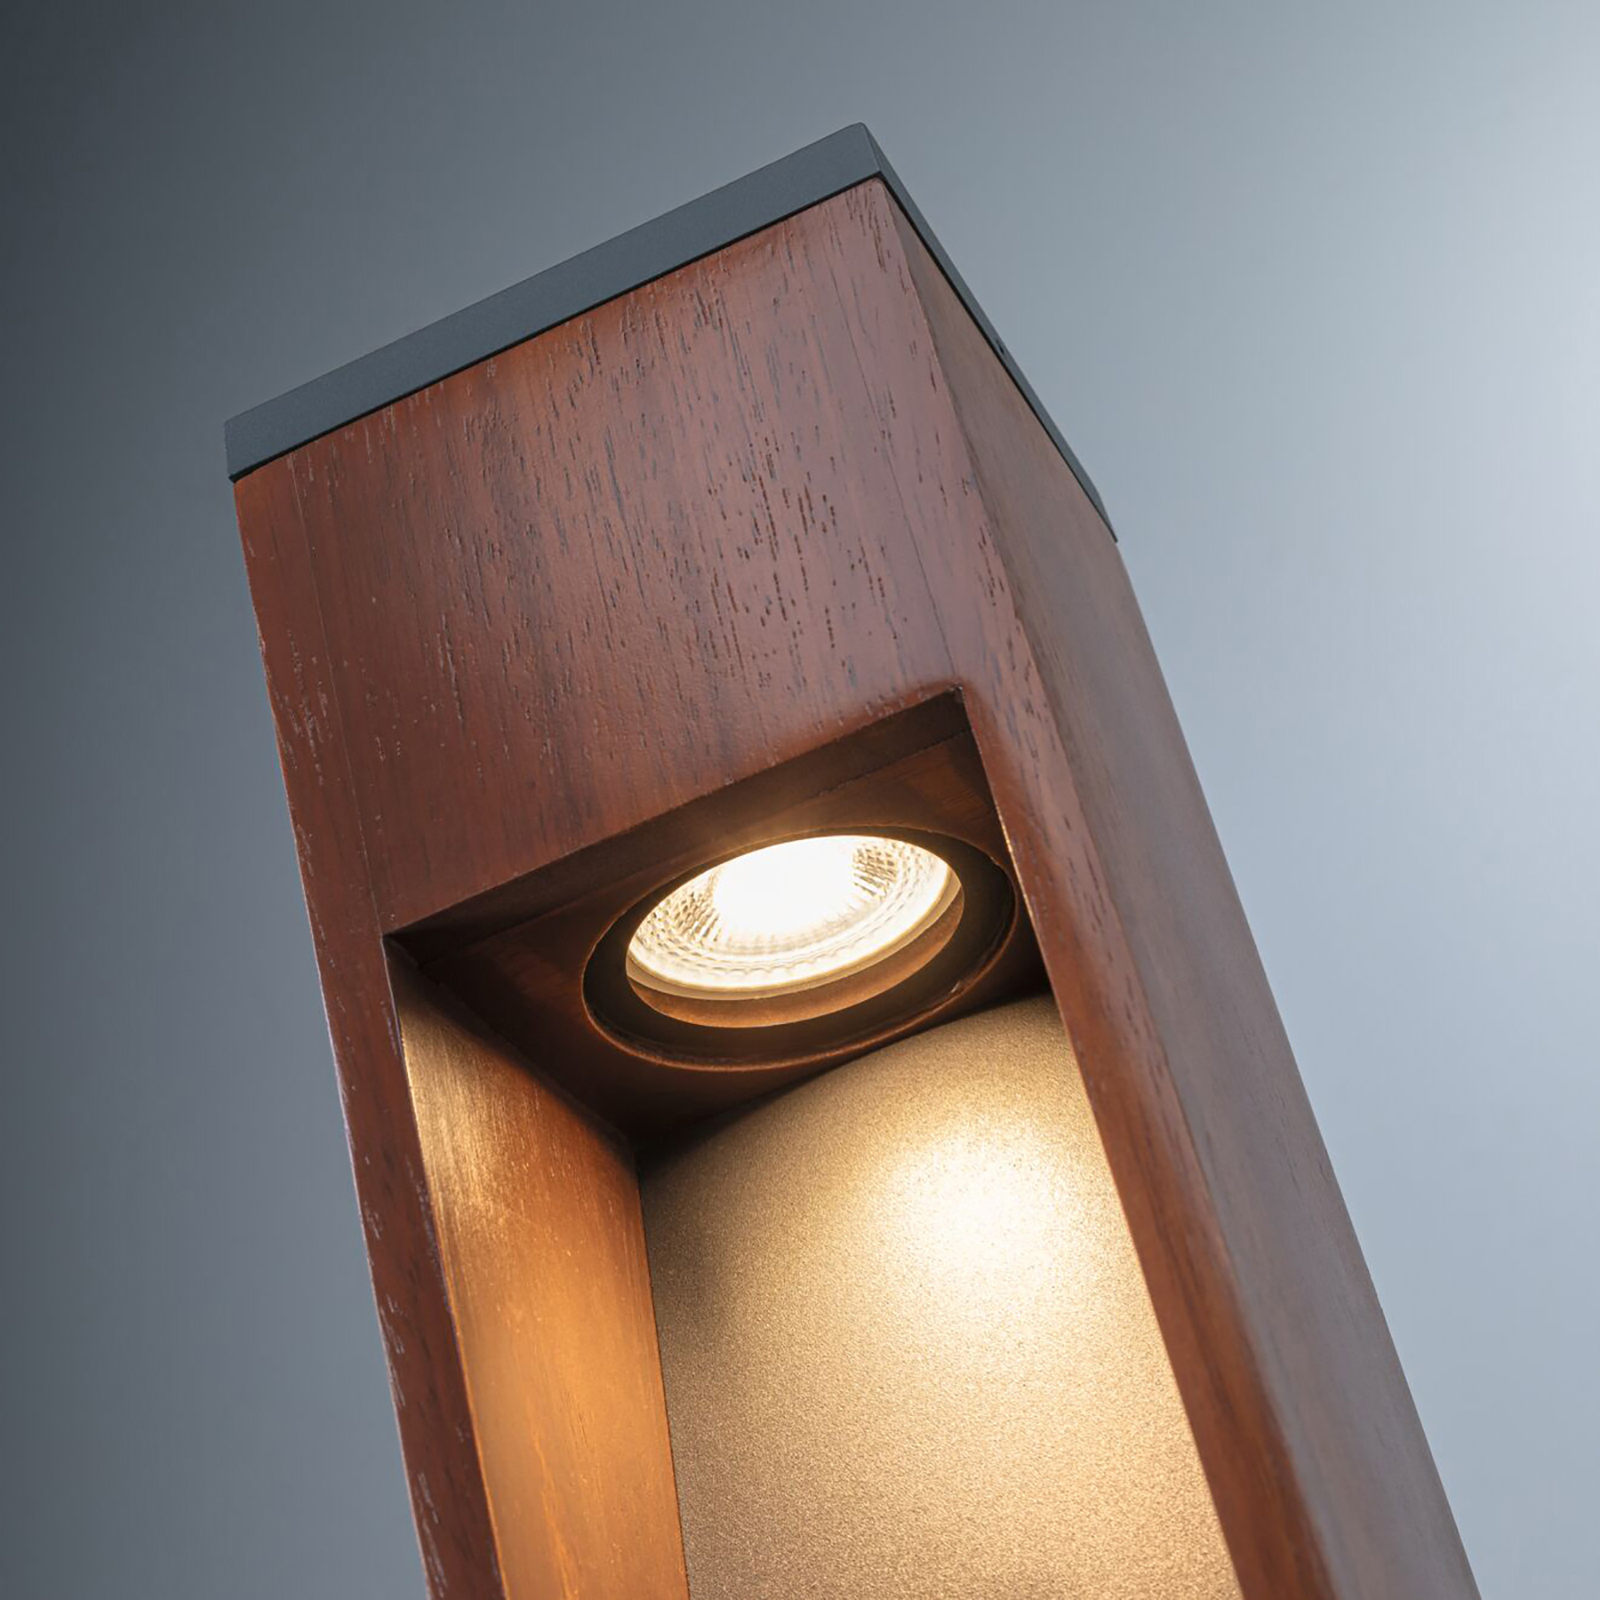 Paulmann Trabia LED plinto luminoso madeira, altura 60 cm